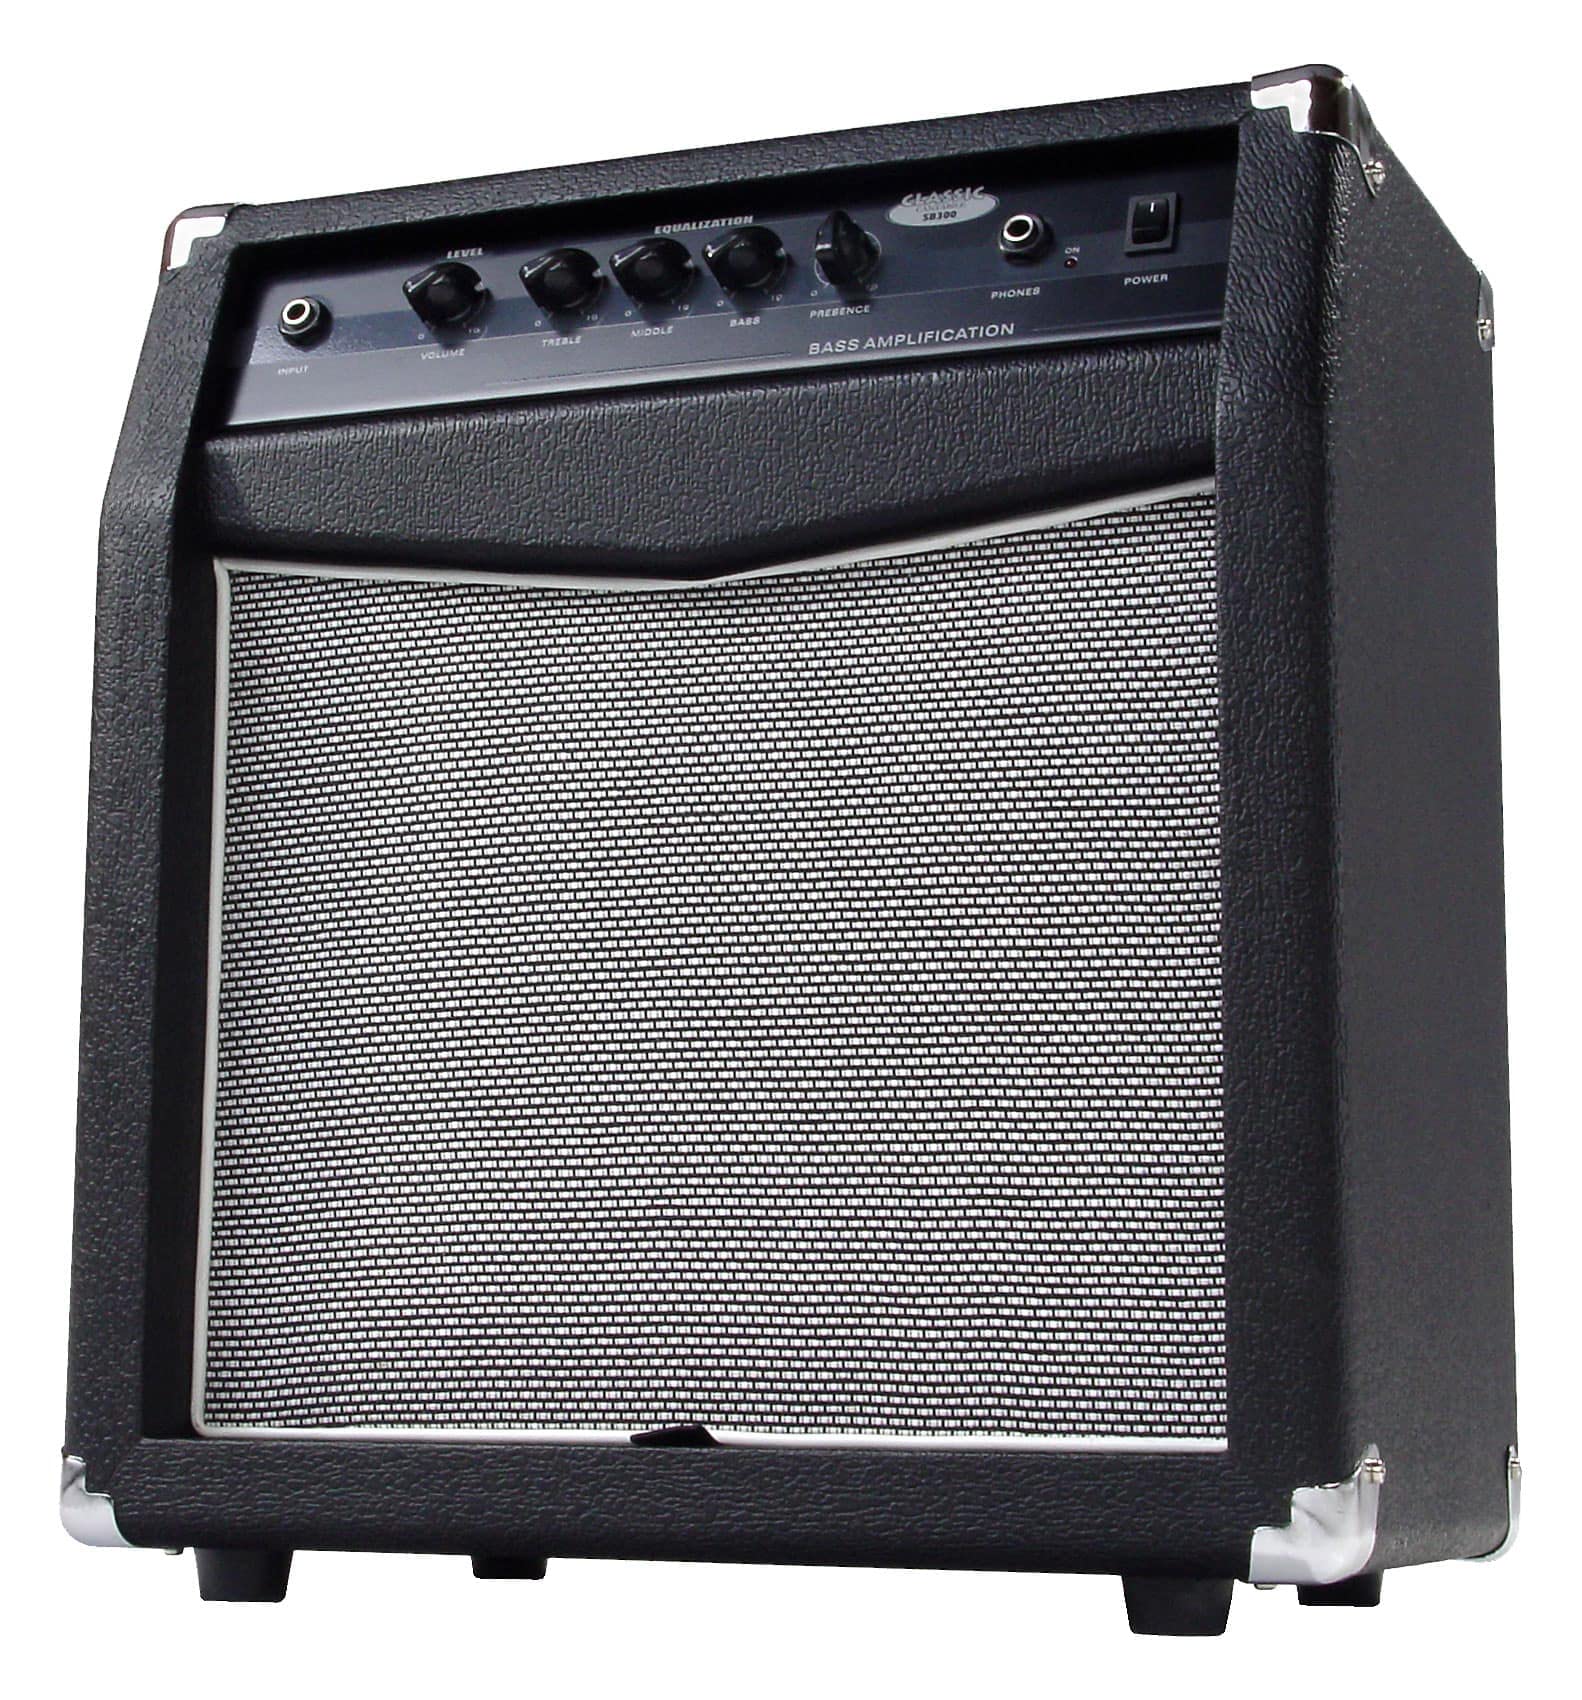 Classic Cantabile SB-300 Basscombo (Verstärker mit 60 Watt, 10" Speaker, 4-Band Equalizer, Bassreflex-Gehäuse)